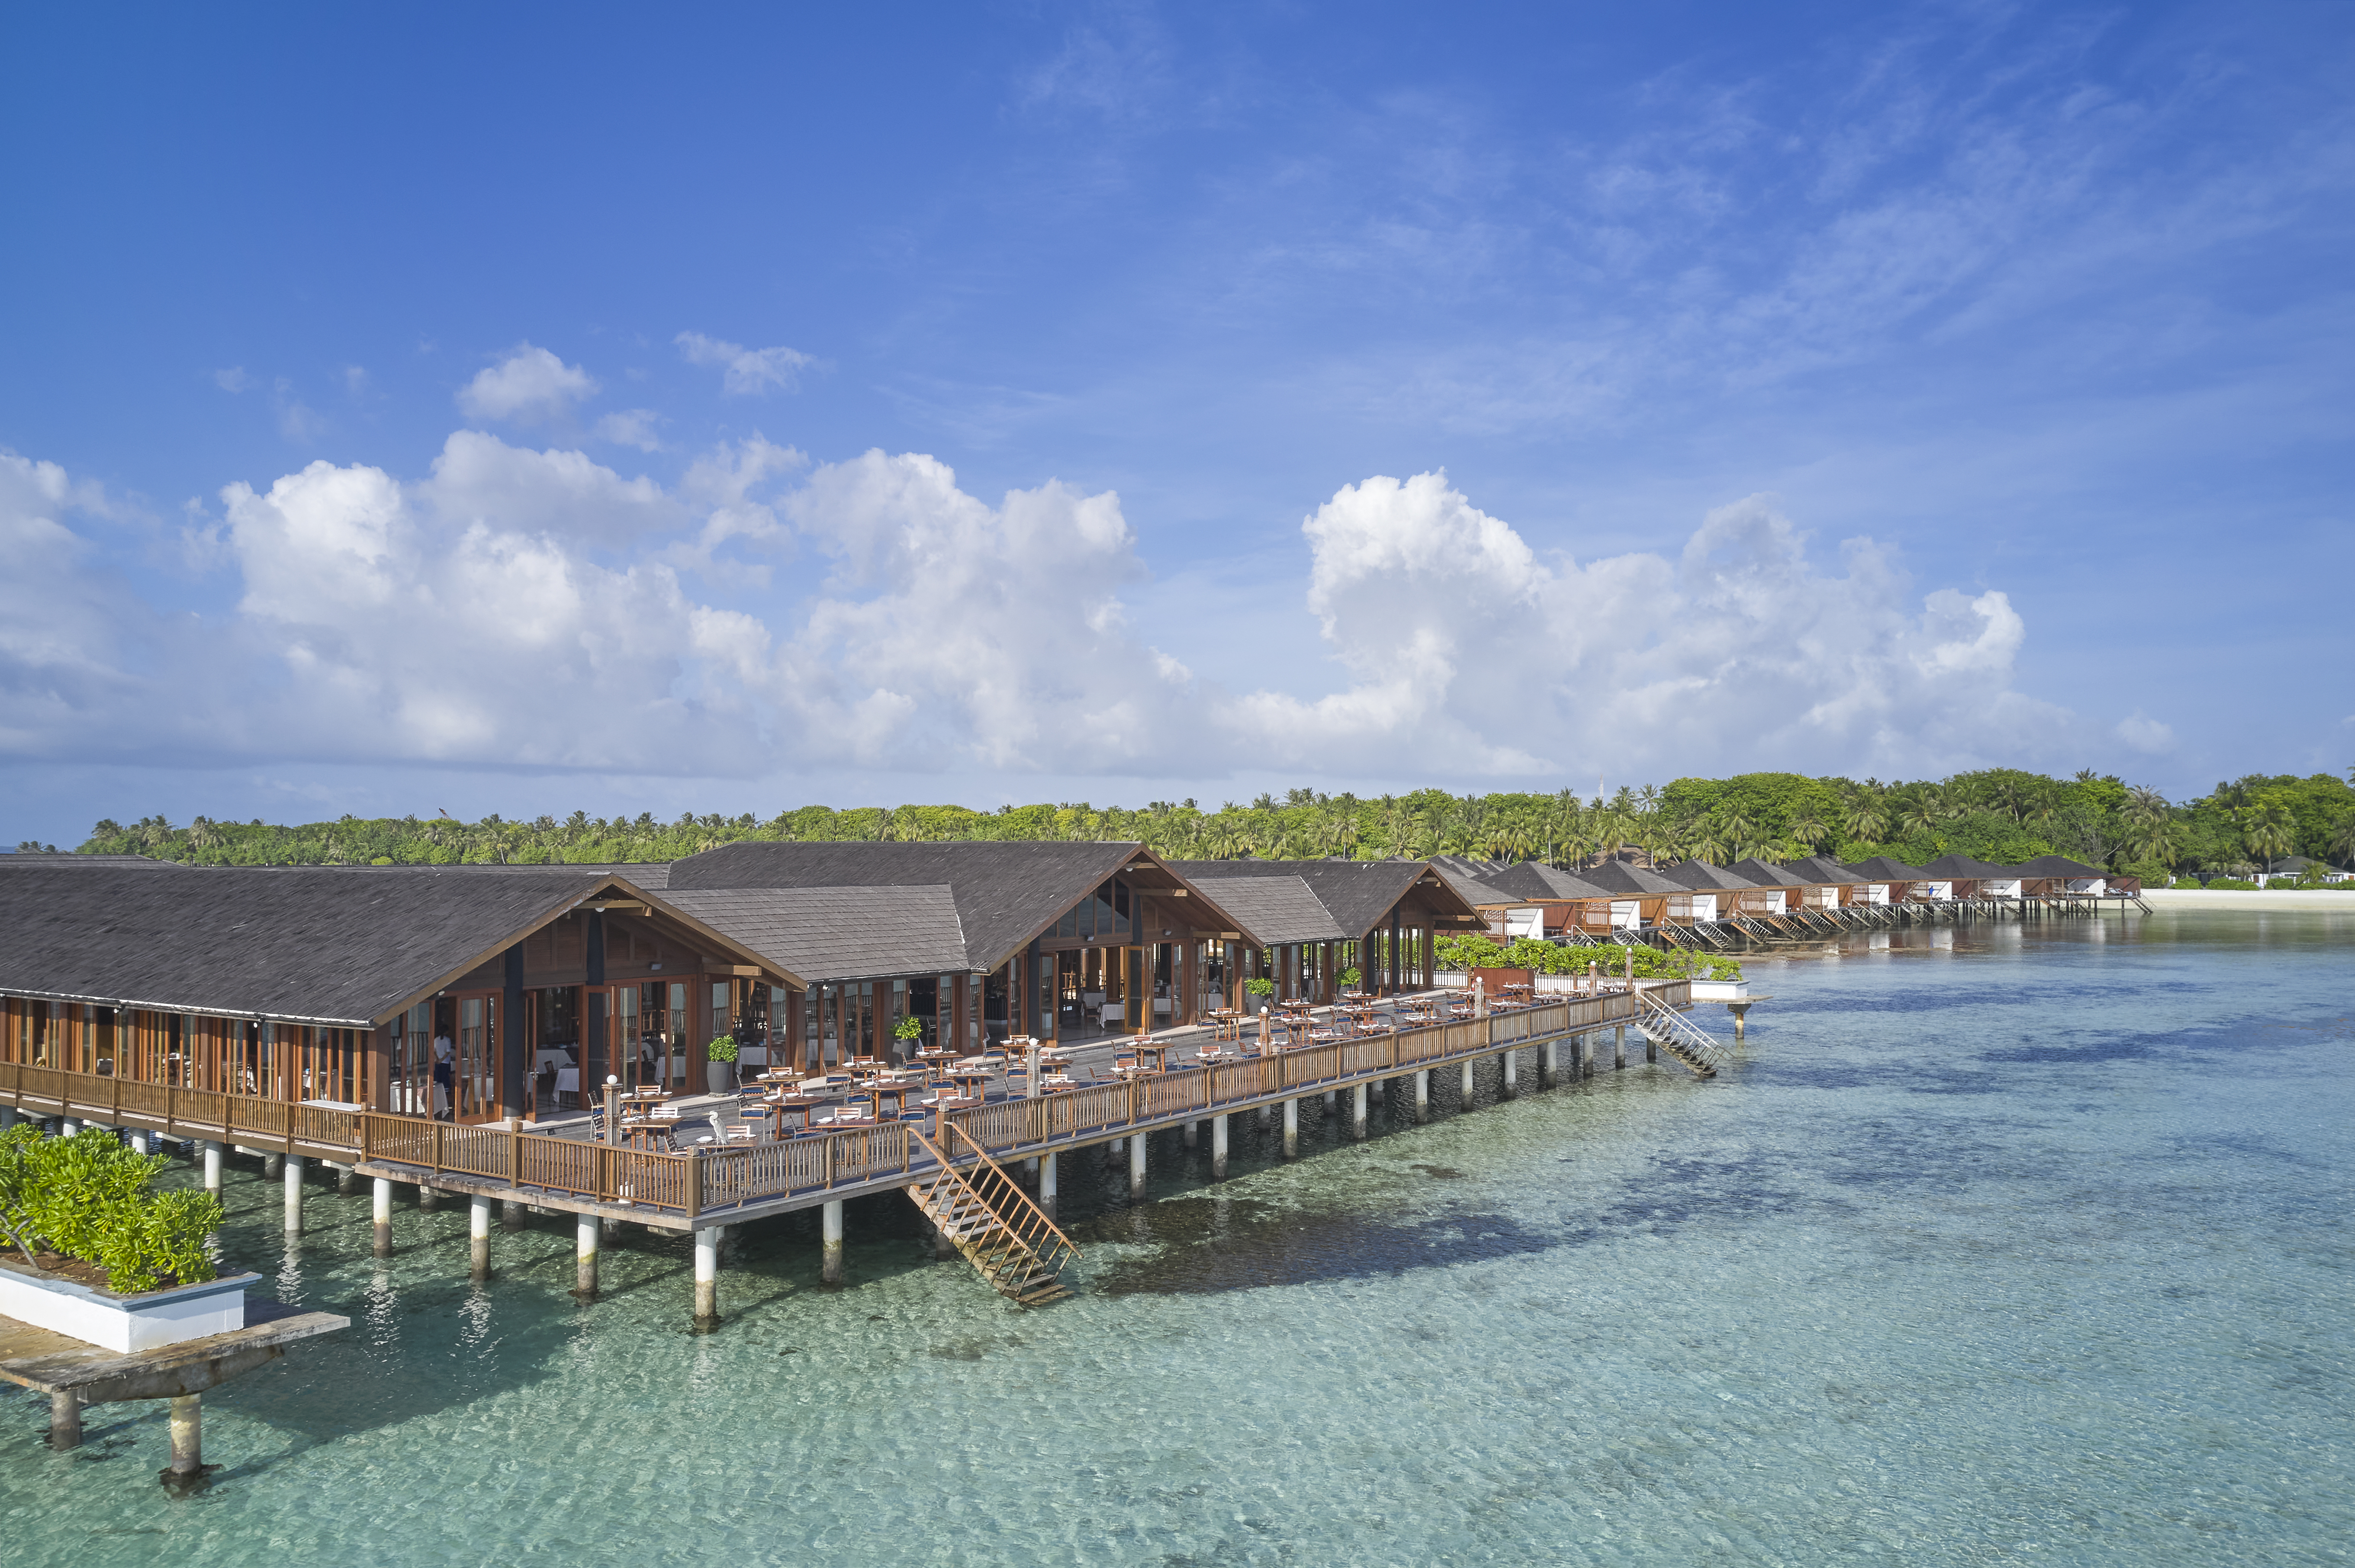 Villa Nautica Paradise Island Resort, North Male Atoll – Updated